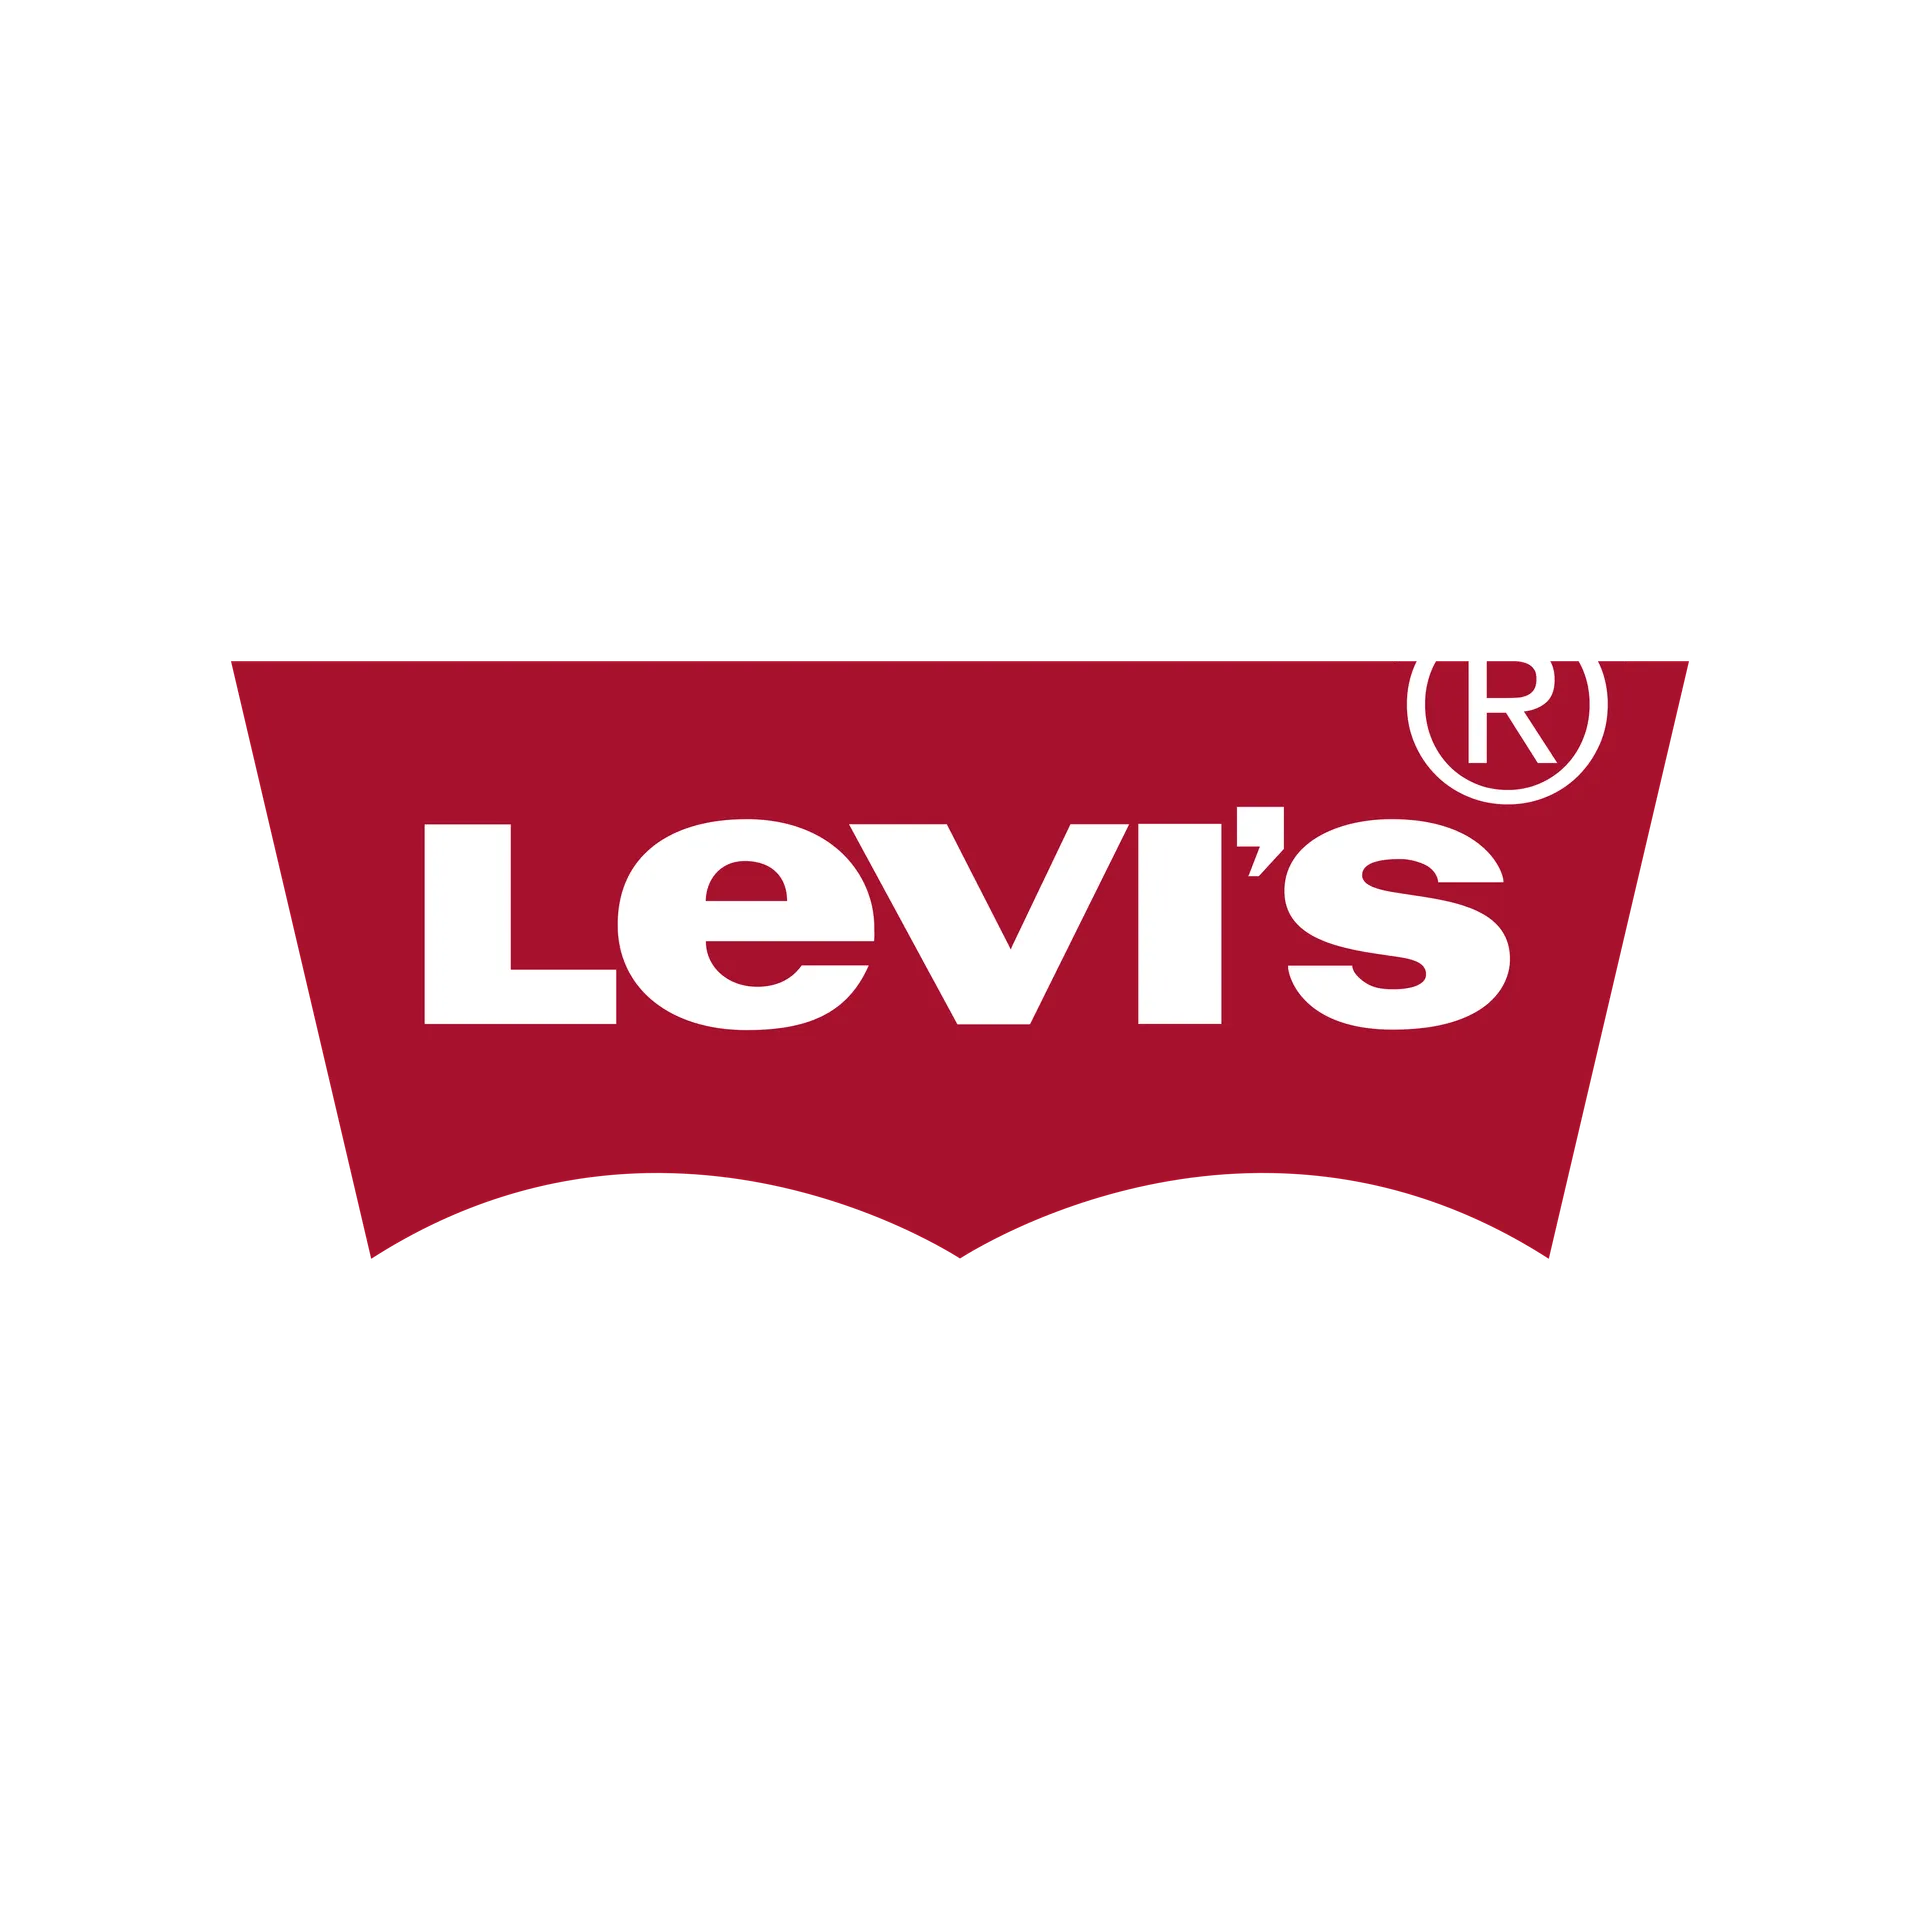 LEVIS logo